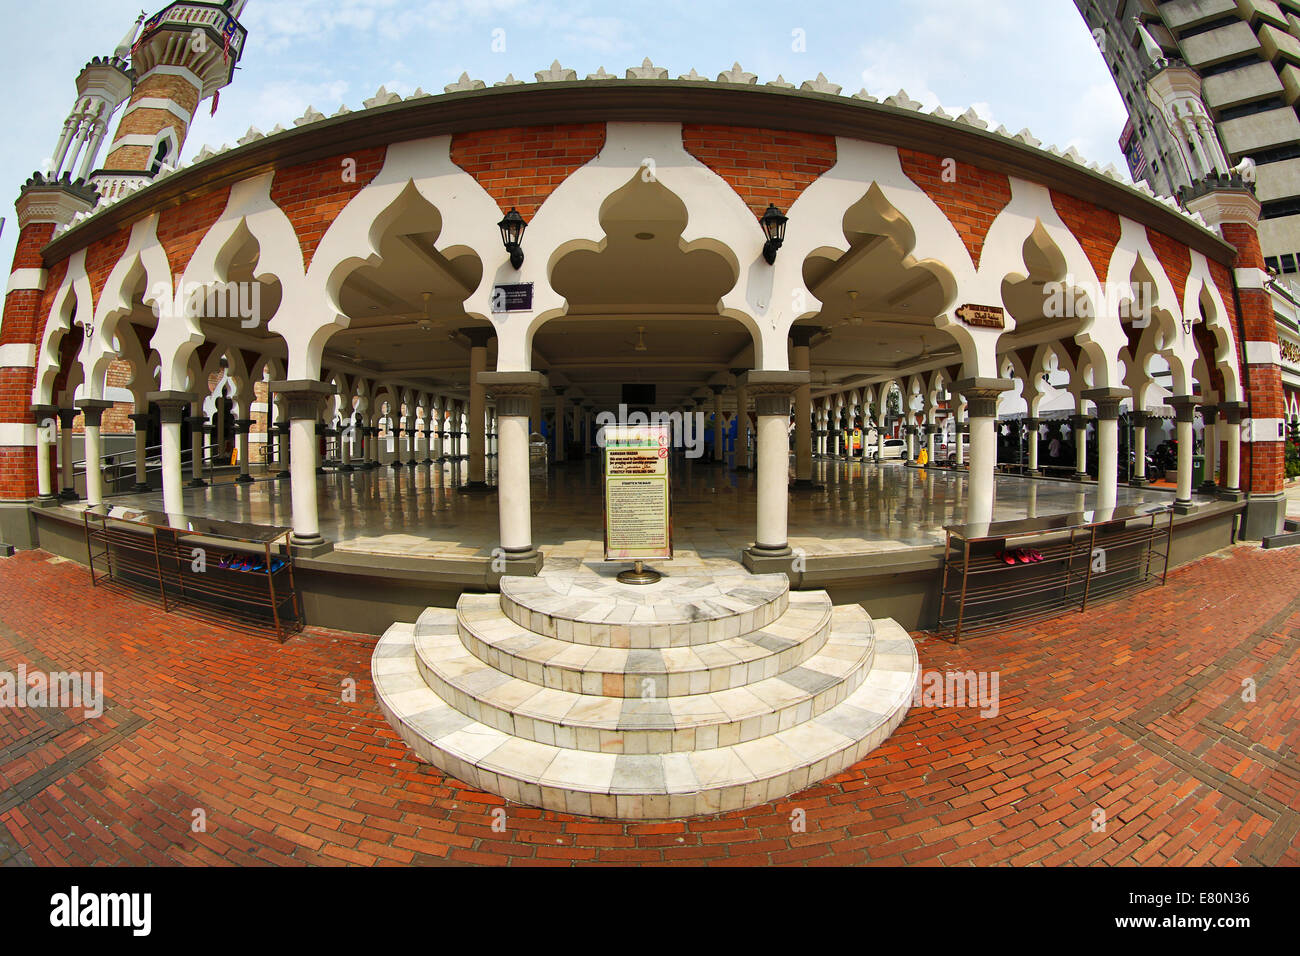 Masjid Jamek, die Jamed Moschee in Kuala Lumpur, Malaysia Stockfoto